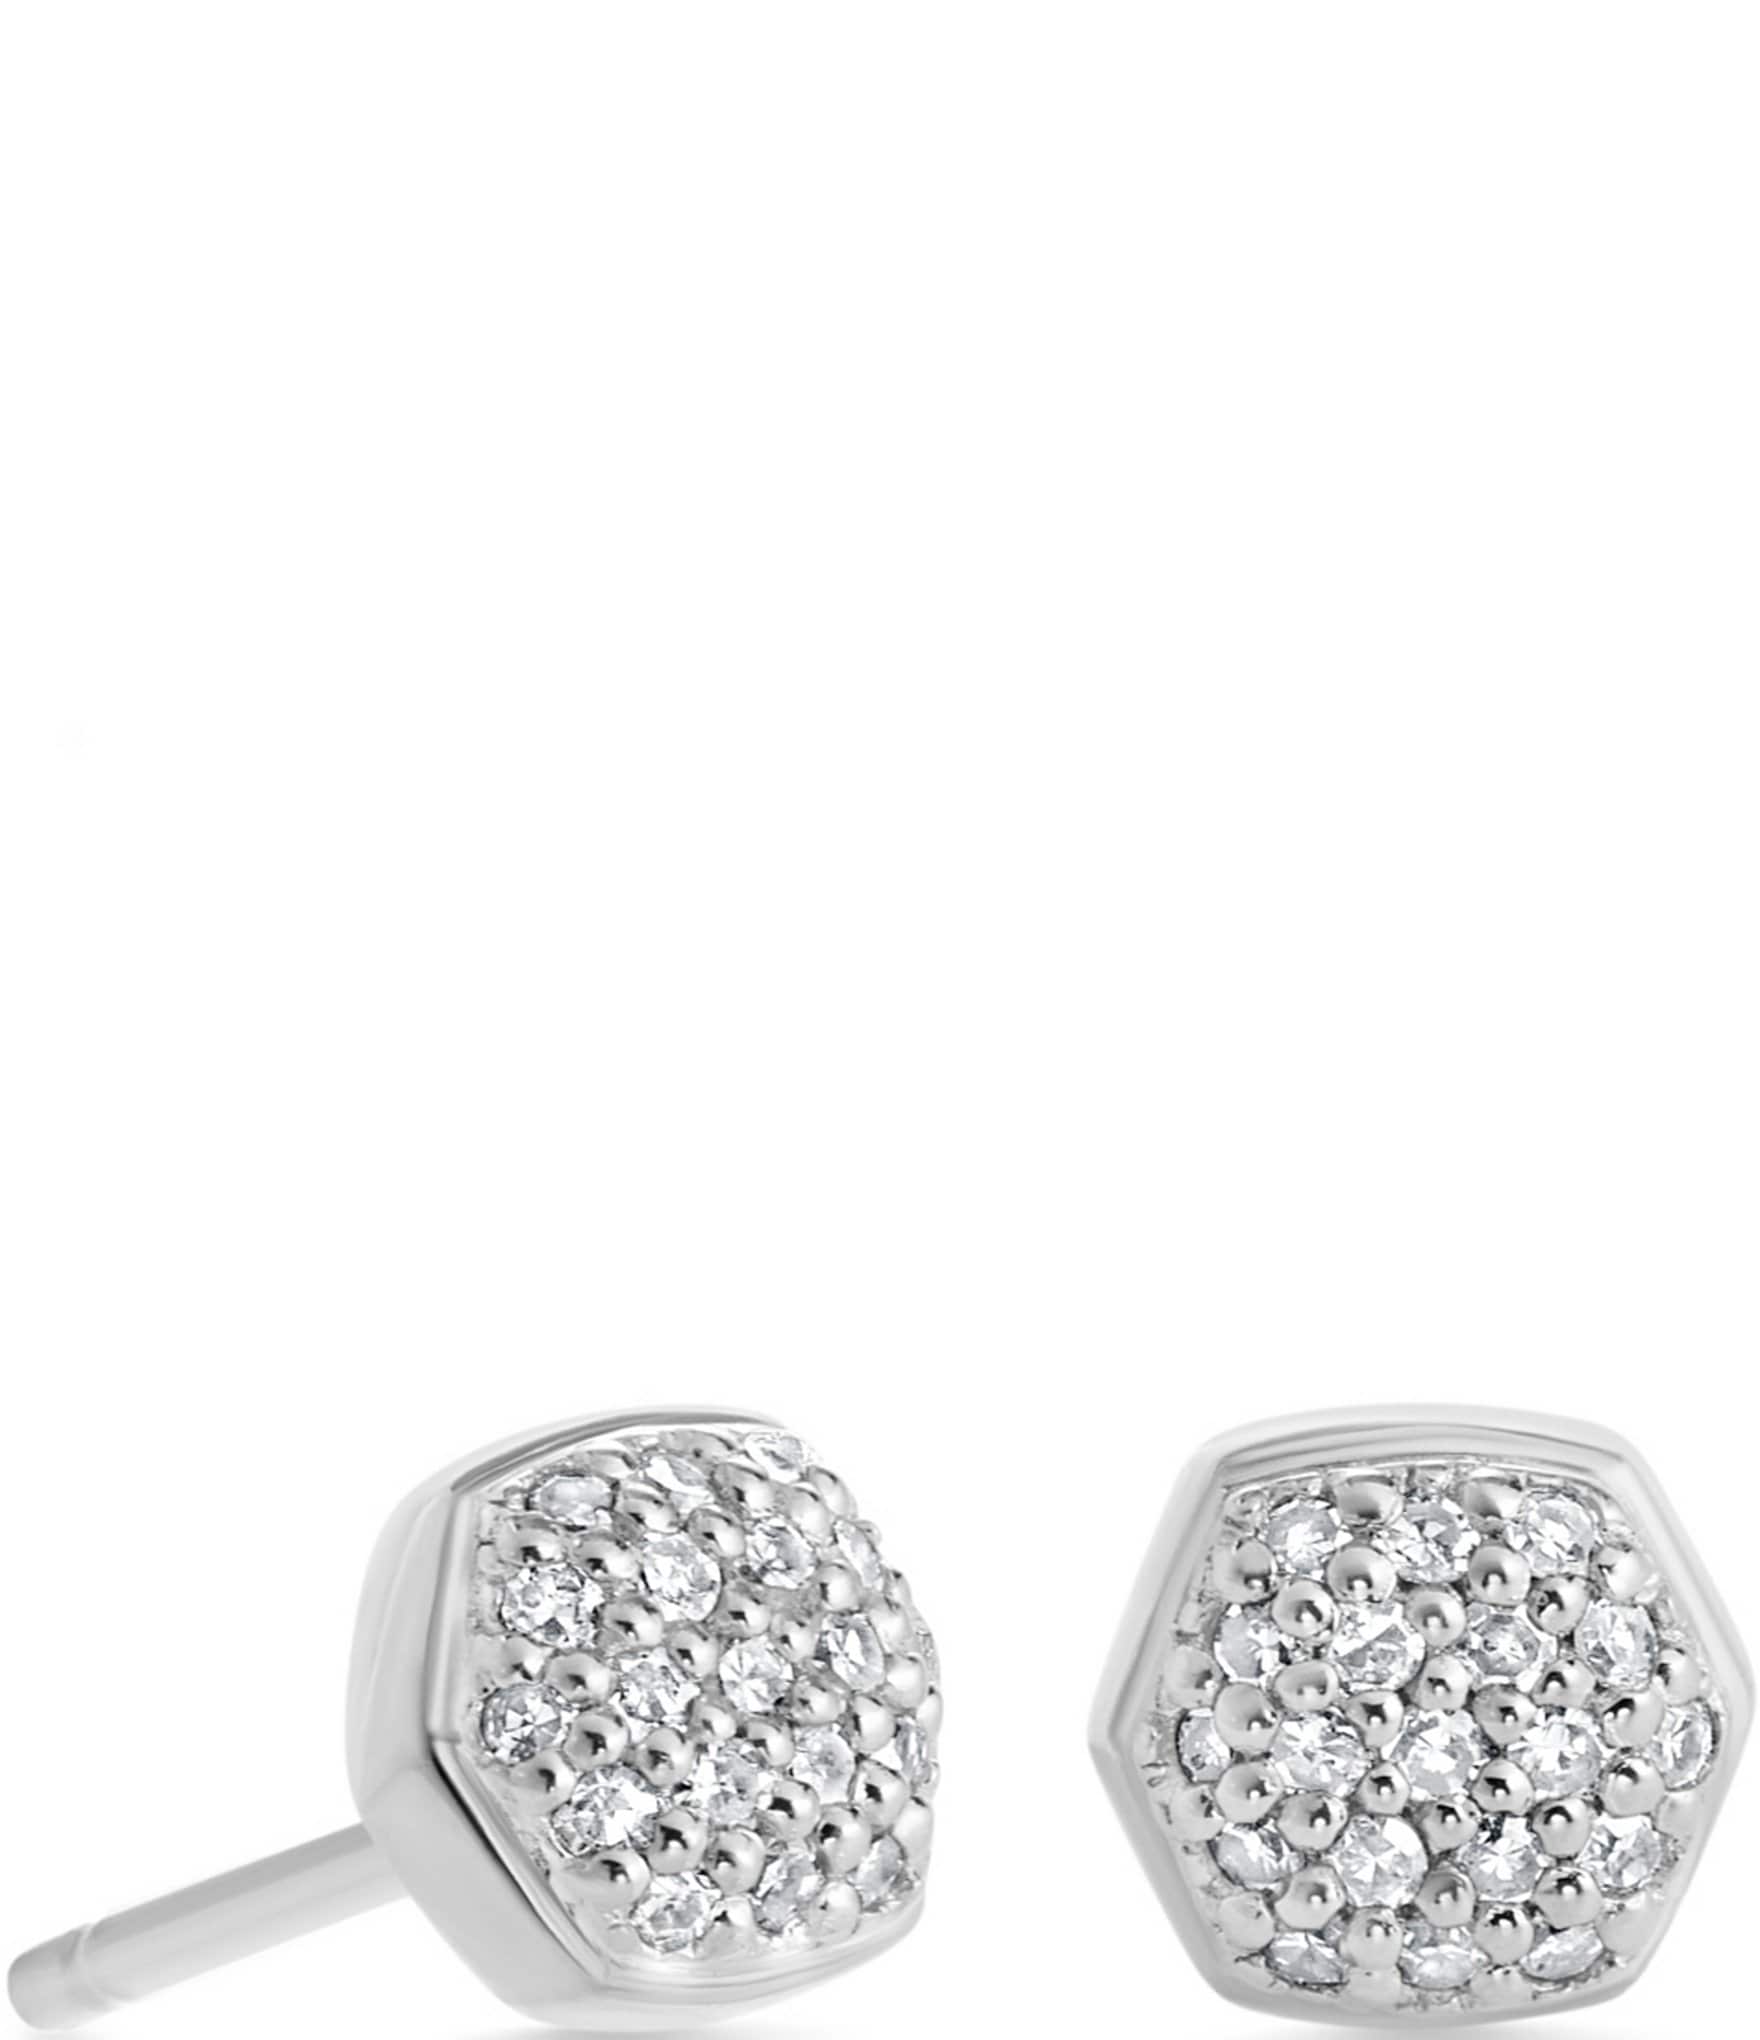 Davie 18k Gold Vermeil Pave Stud Earrings in White Diamond